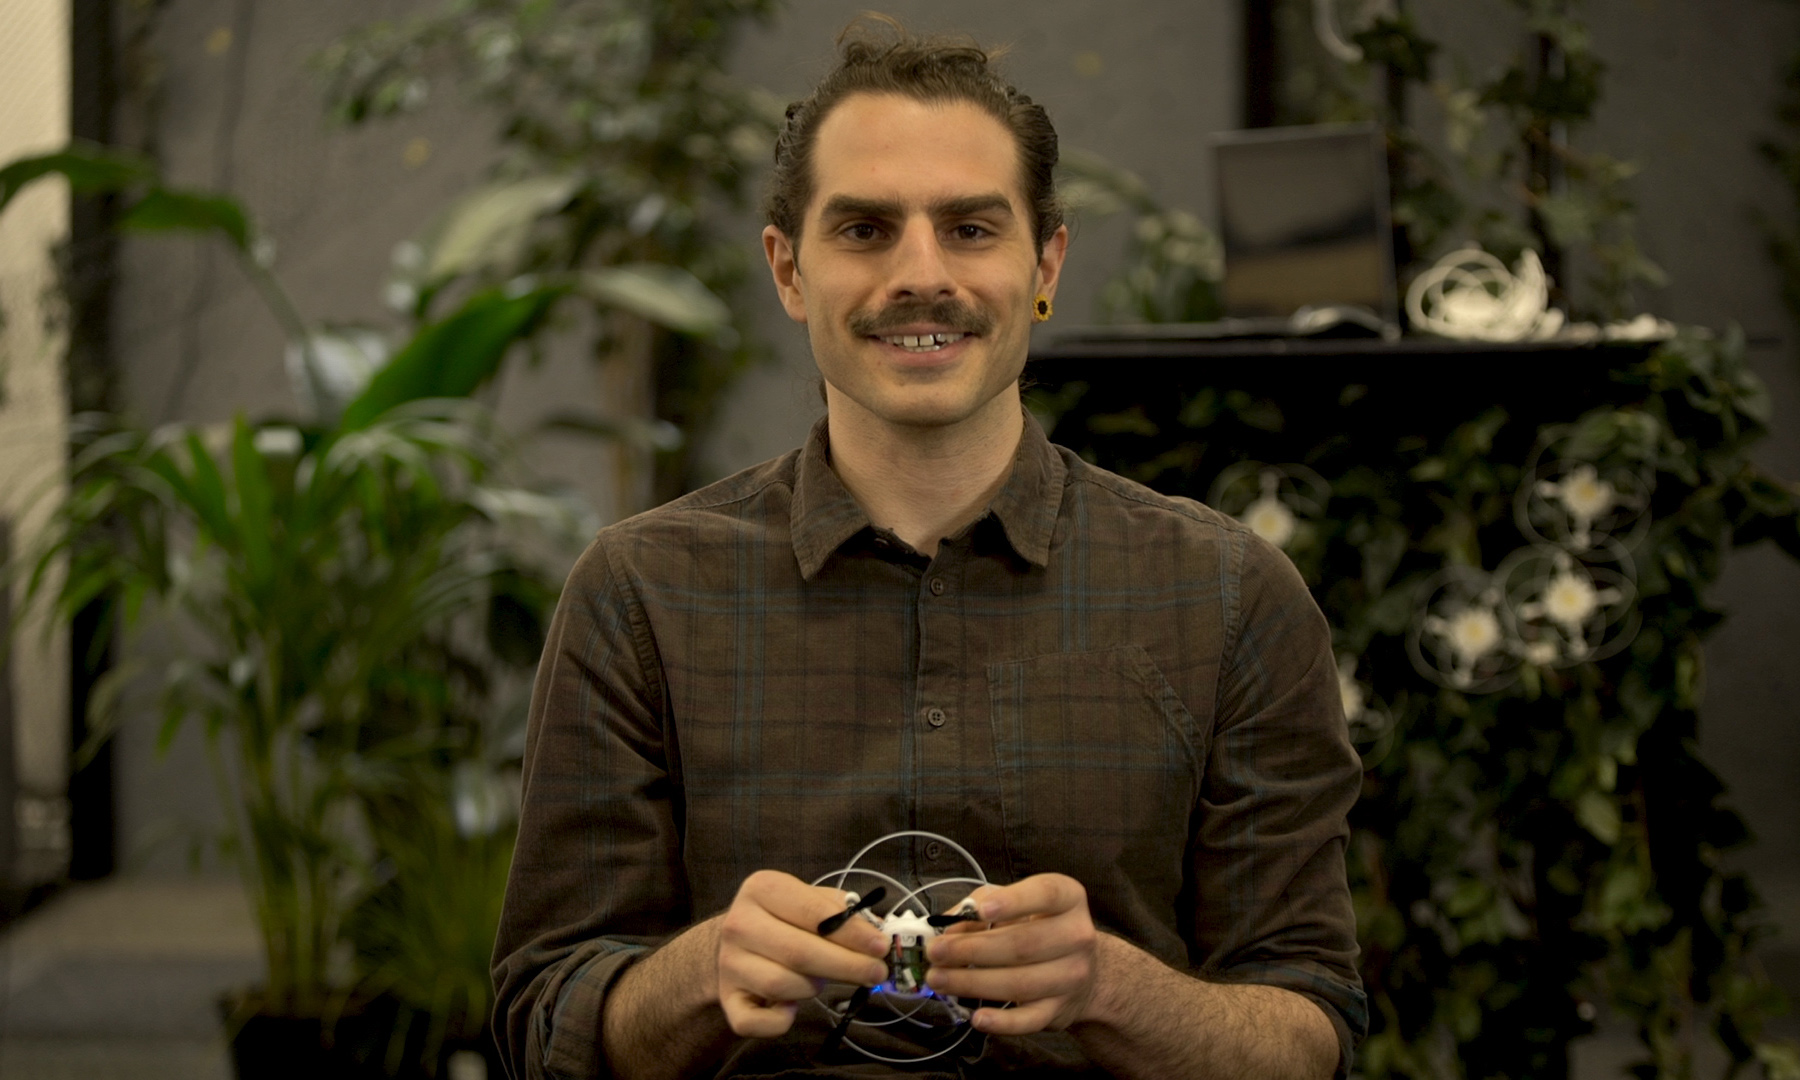 Joe La Delfa talks to camera, holding one of this drones.